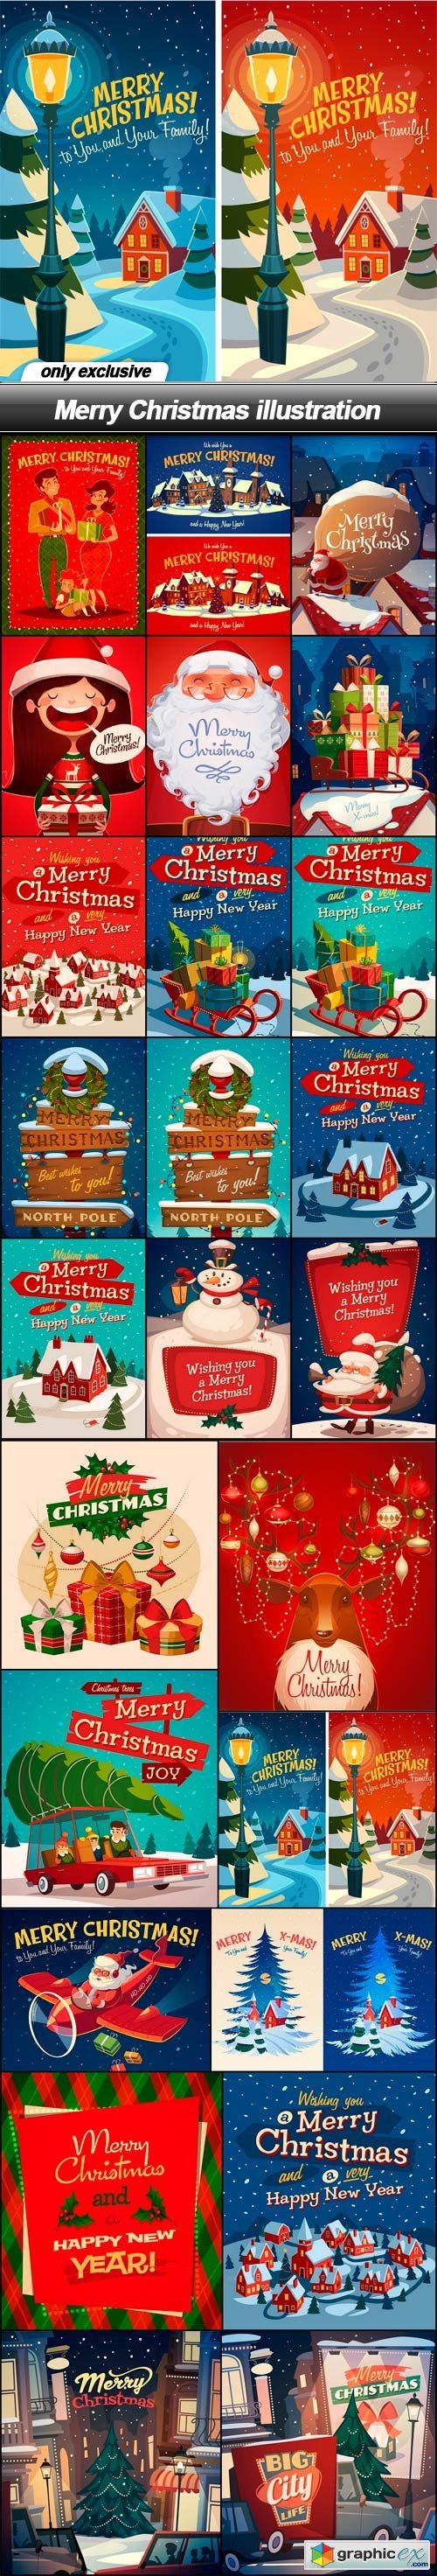 Merry Christmas illustration - 25 EPS